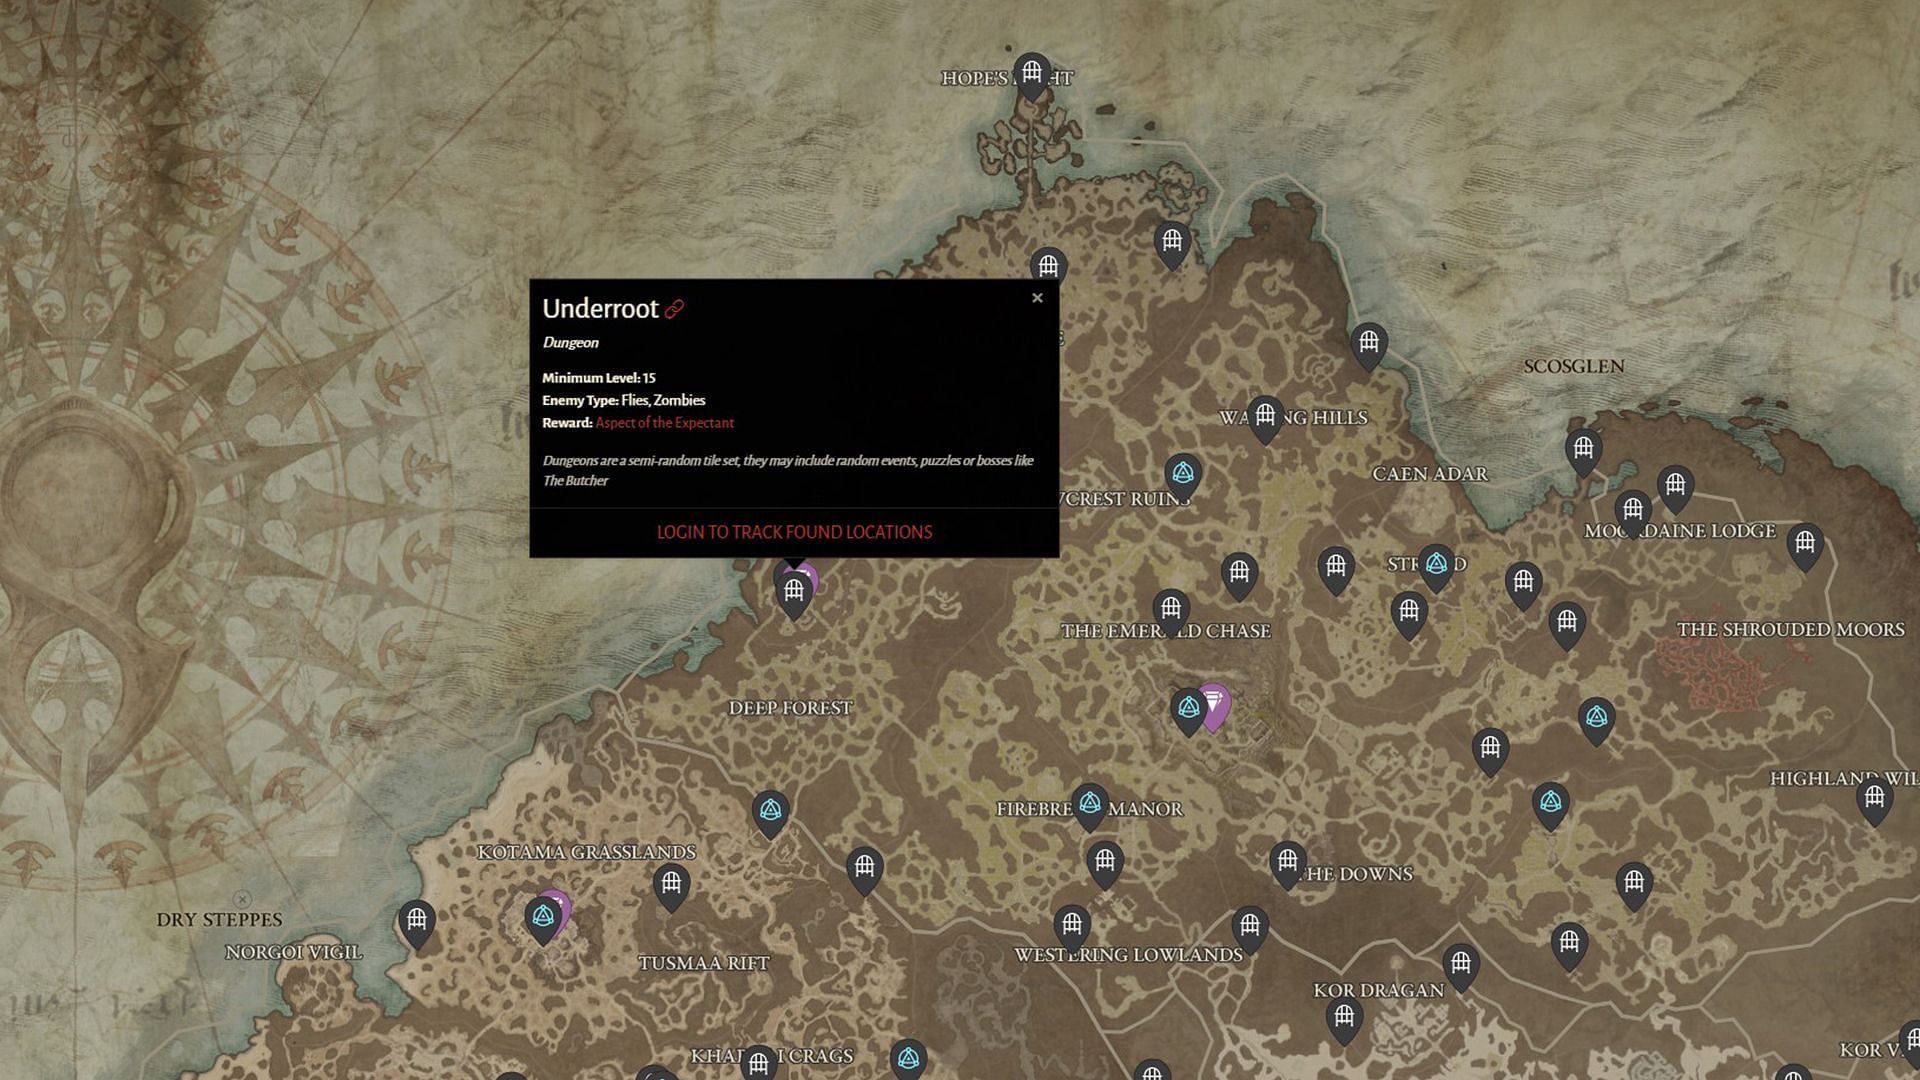 Diablo 4 Underroot Dungeon location (Image via Blizzard Entertainment)